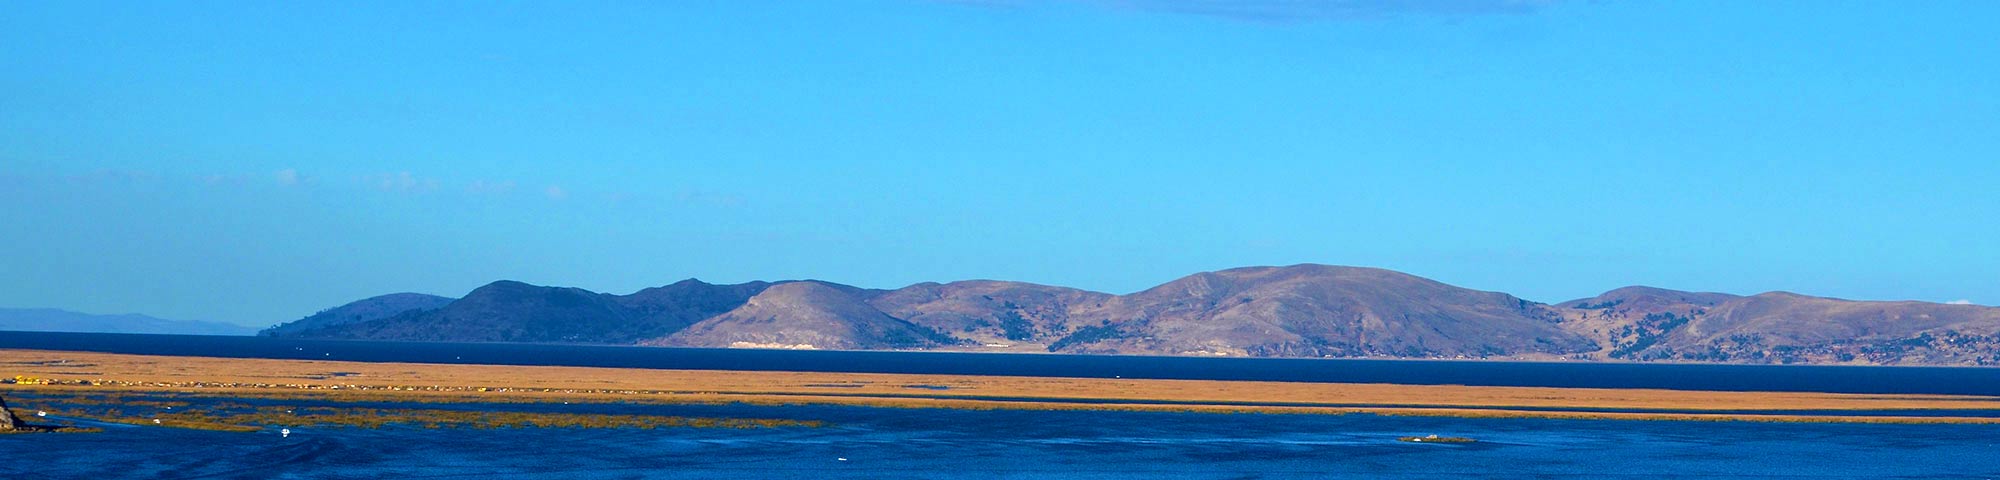 Cerro Huajsapata